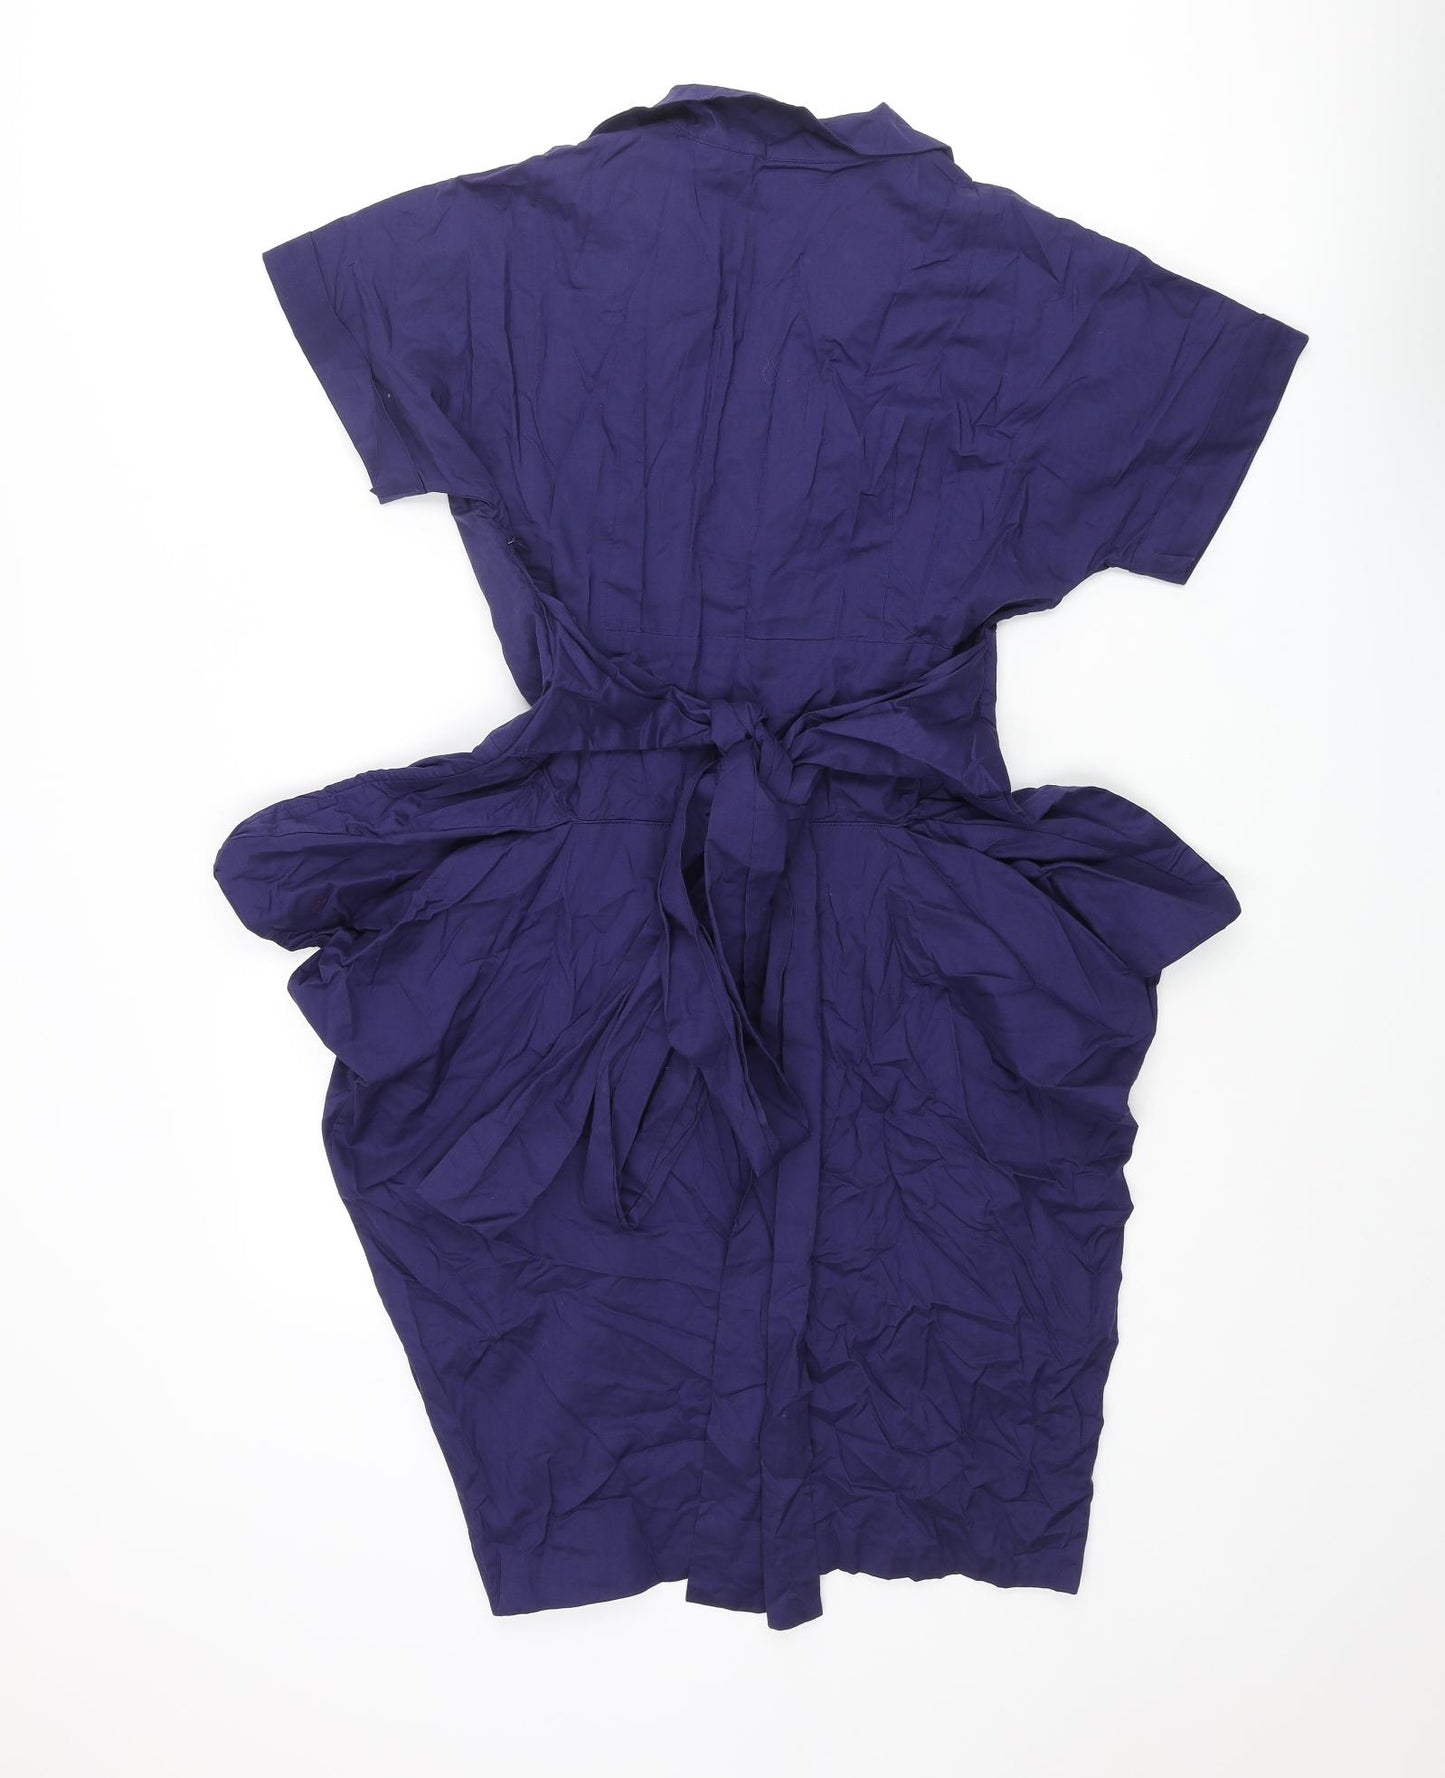 Full Circle Womens Purple Cotton Shift Size 12 Collared Zip